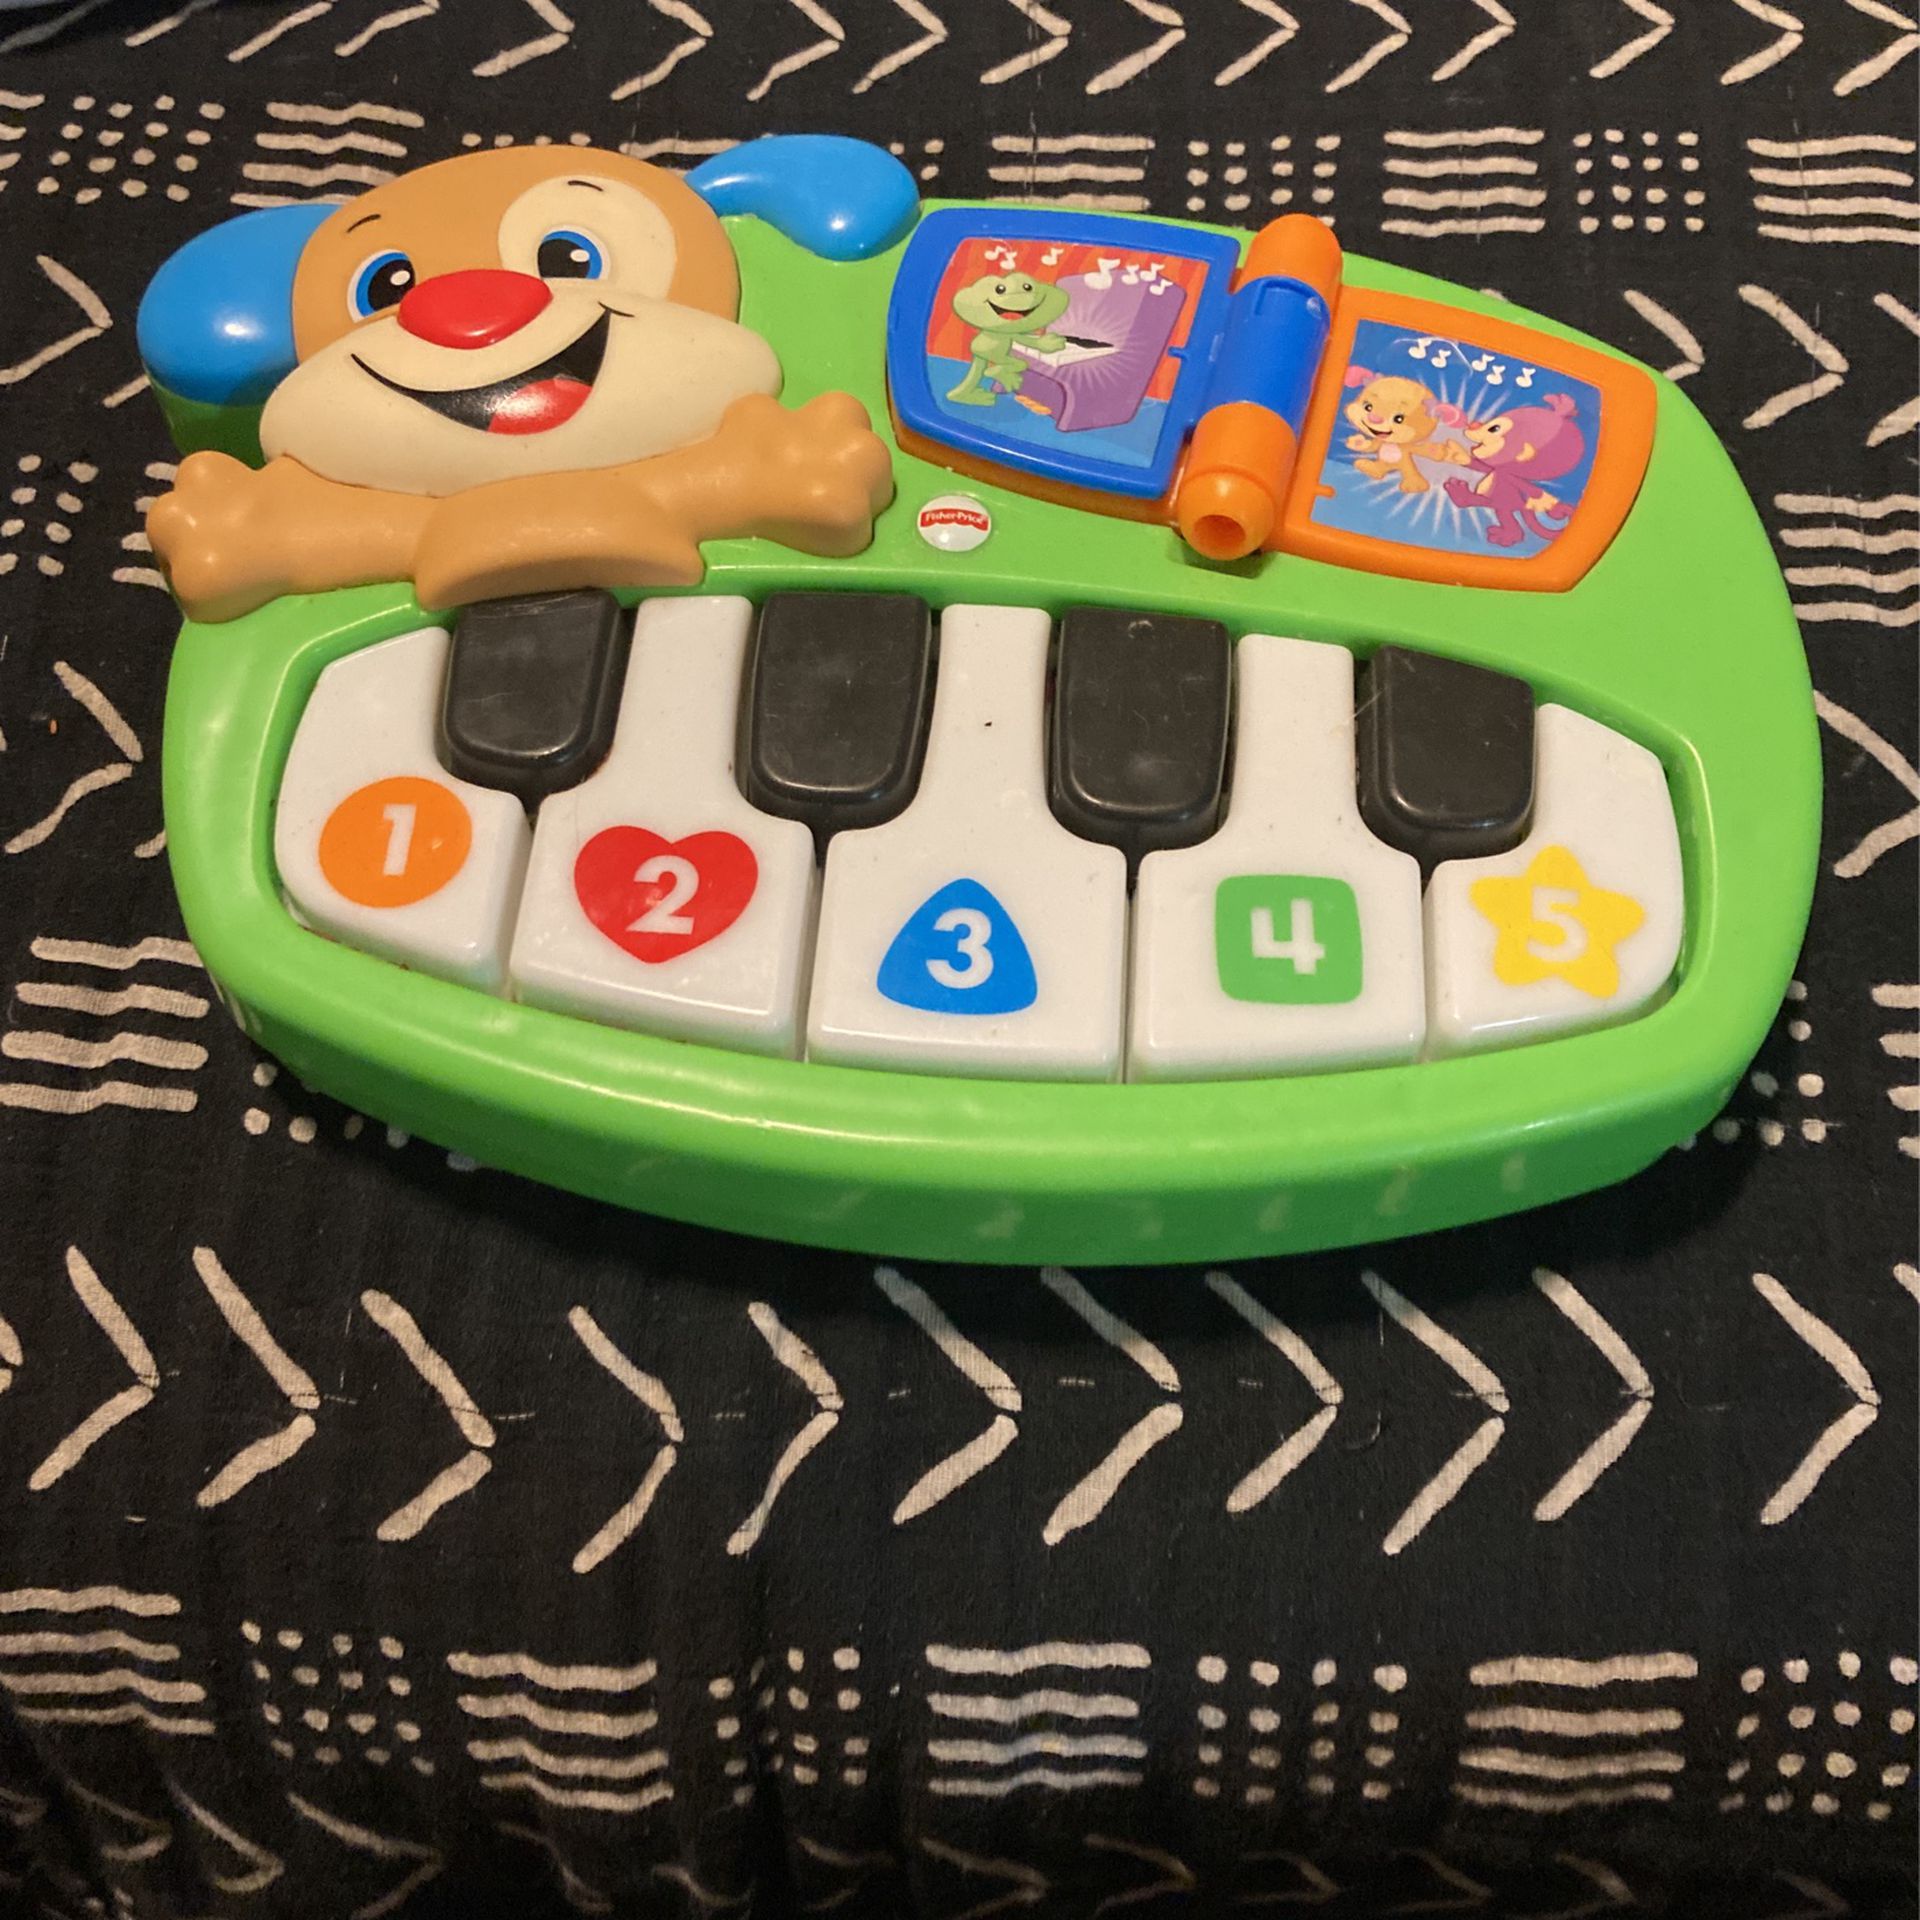 Baby Piano 